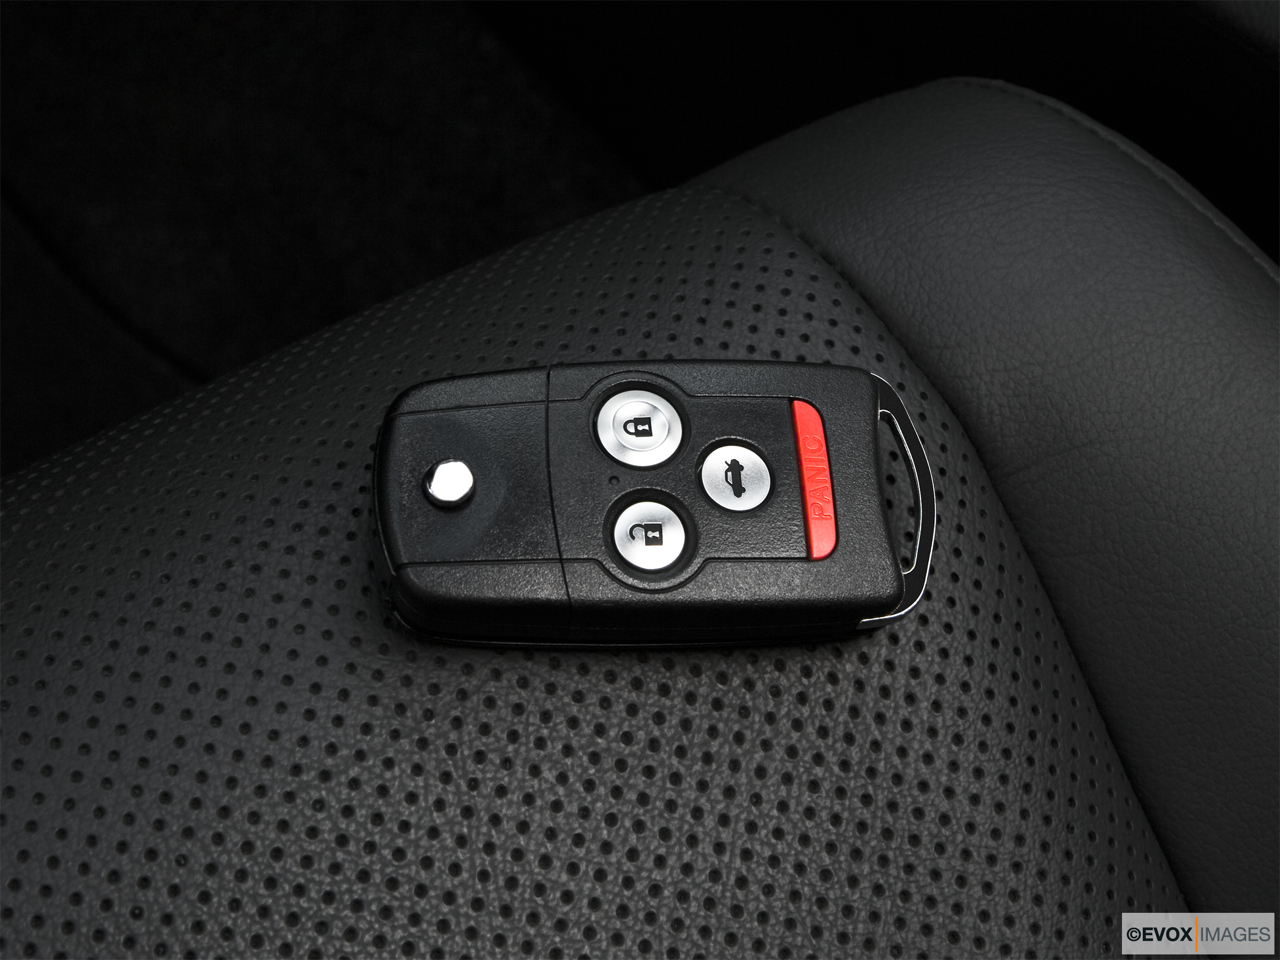 2010 Acura TSX V6 Key fob on driver's seat. 